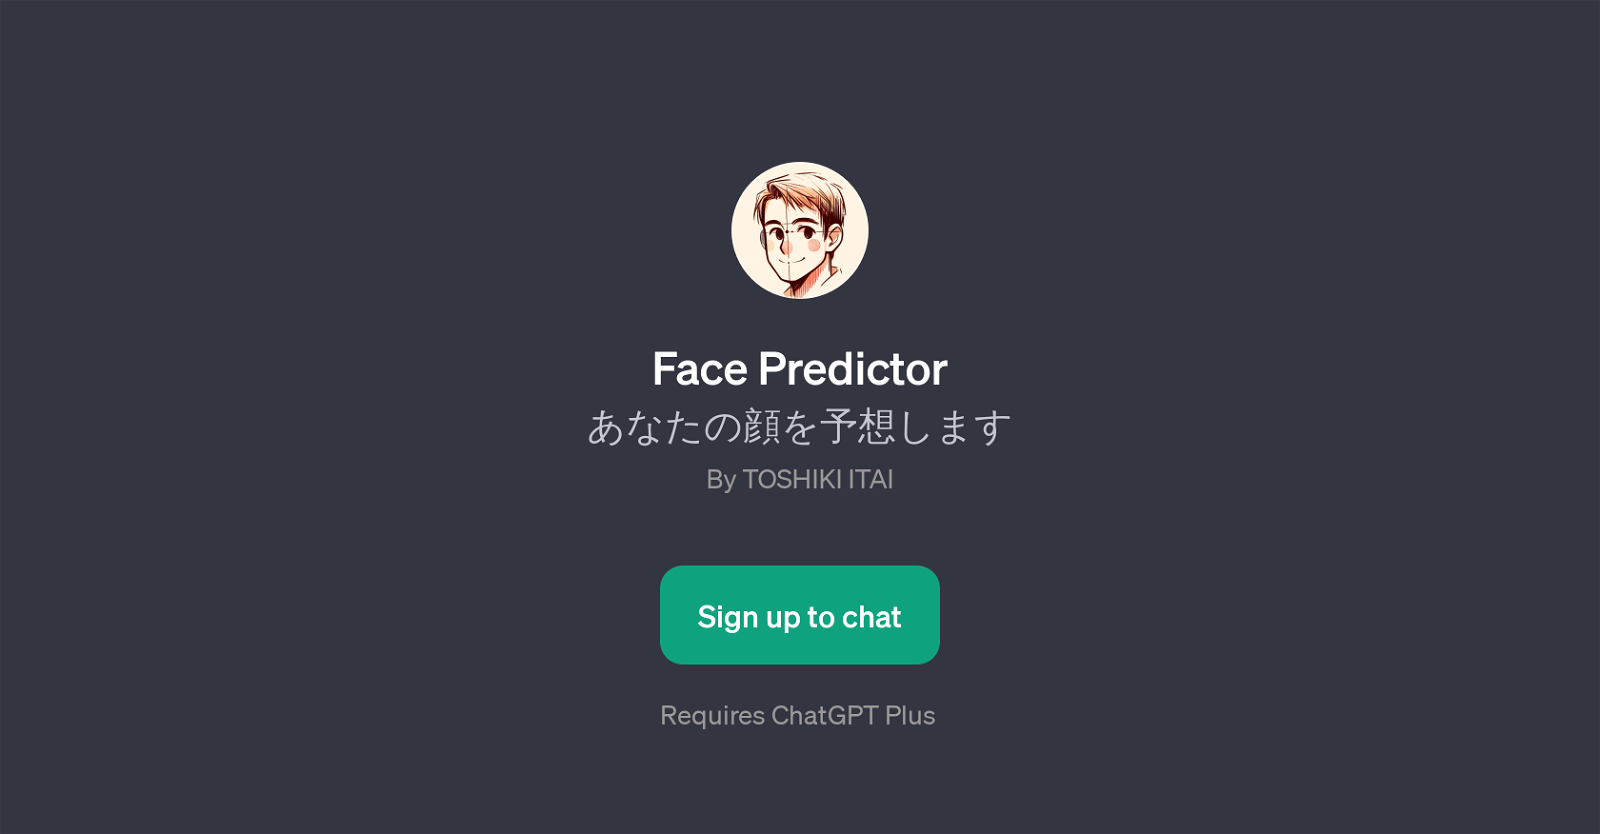 Face Predictor website